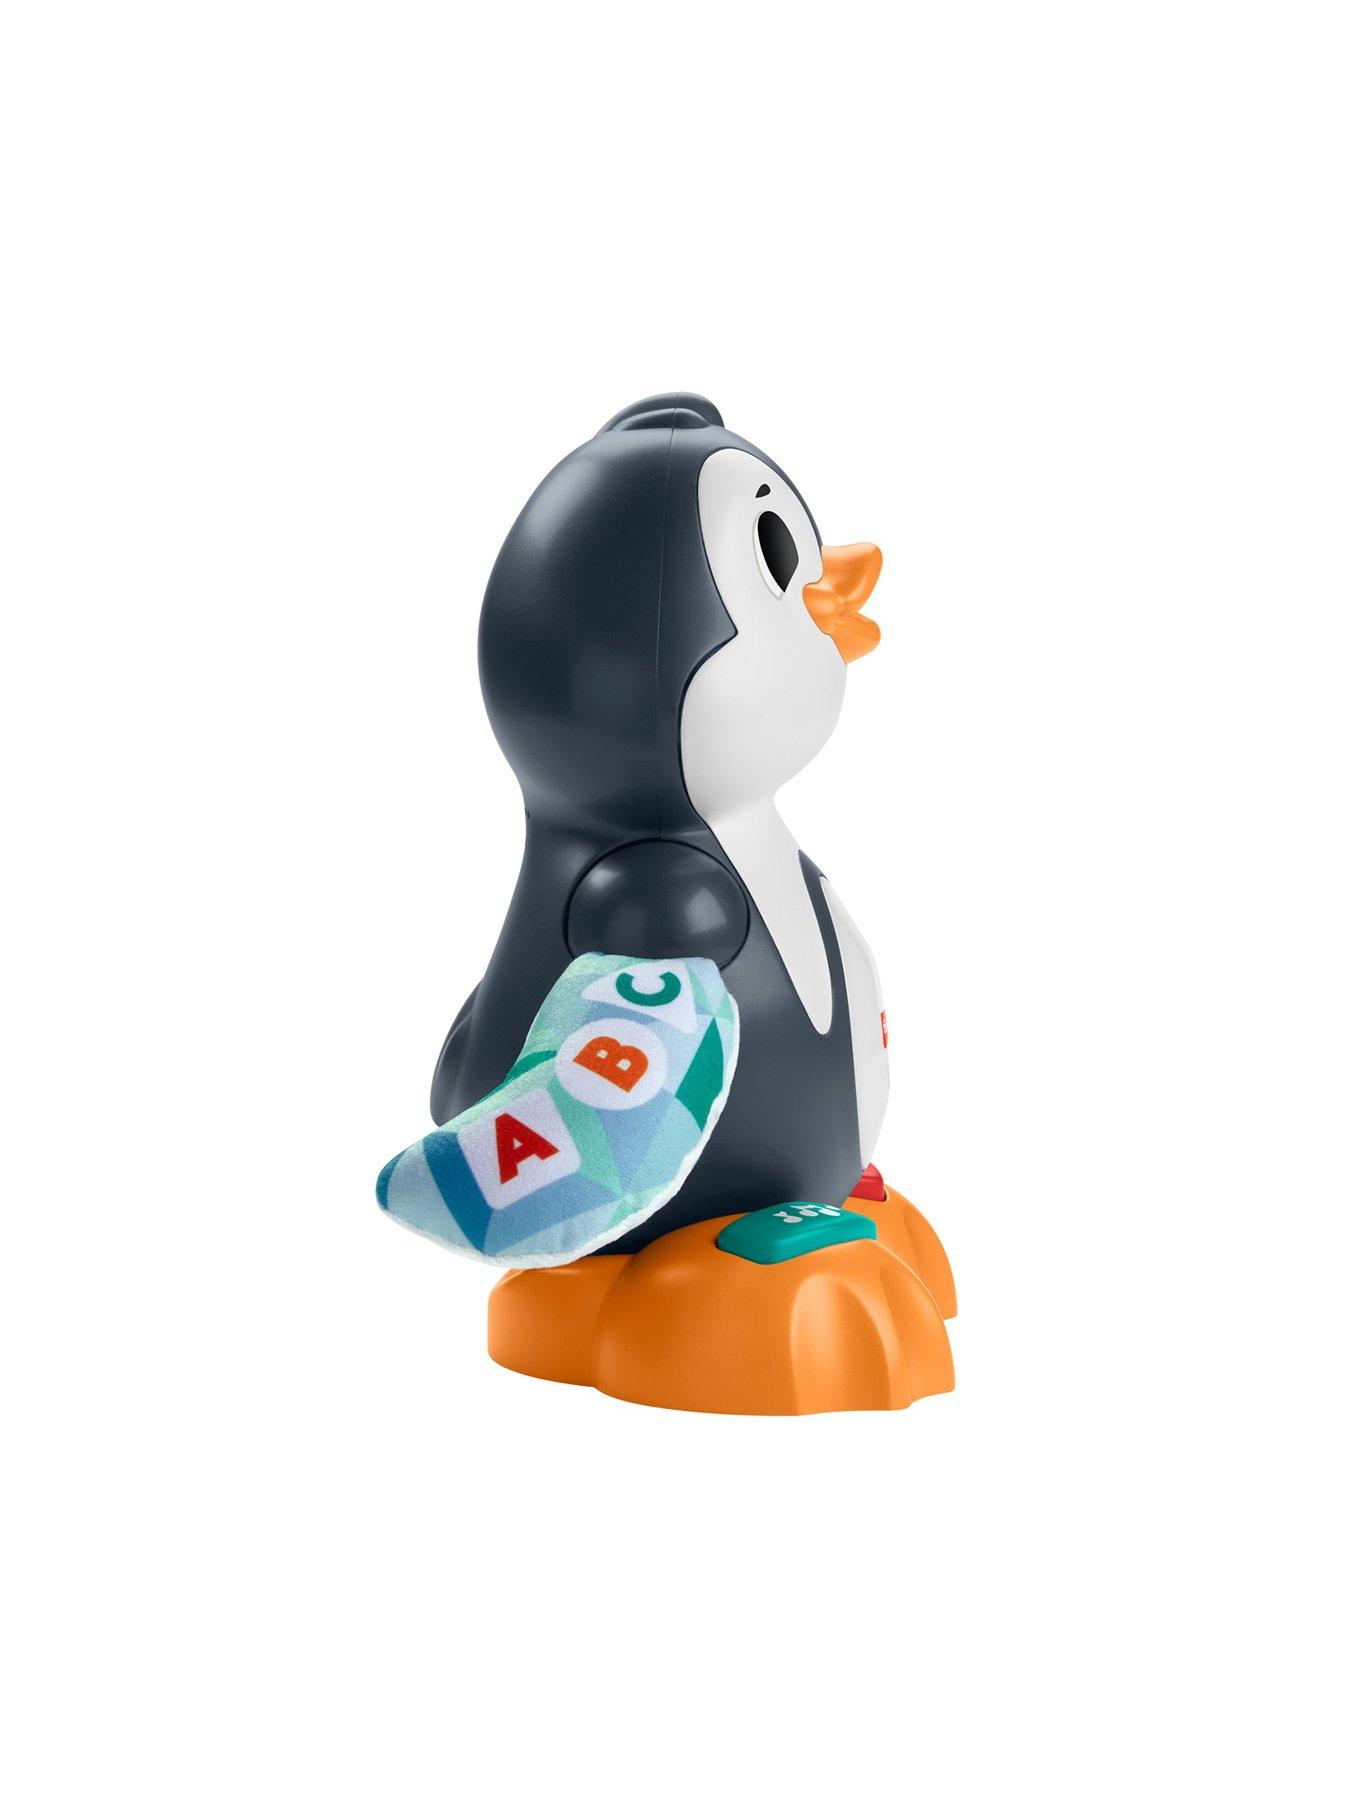 Linkimals- Cool Beats Penguin — Adventure Hobbies & Toys